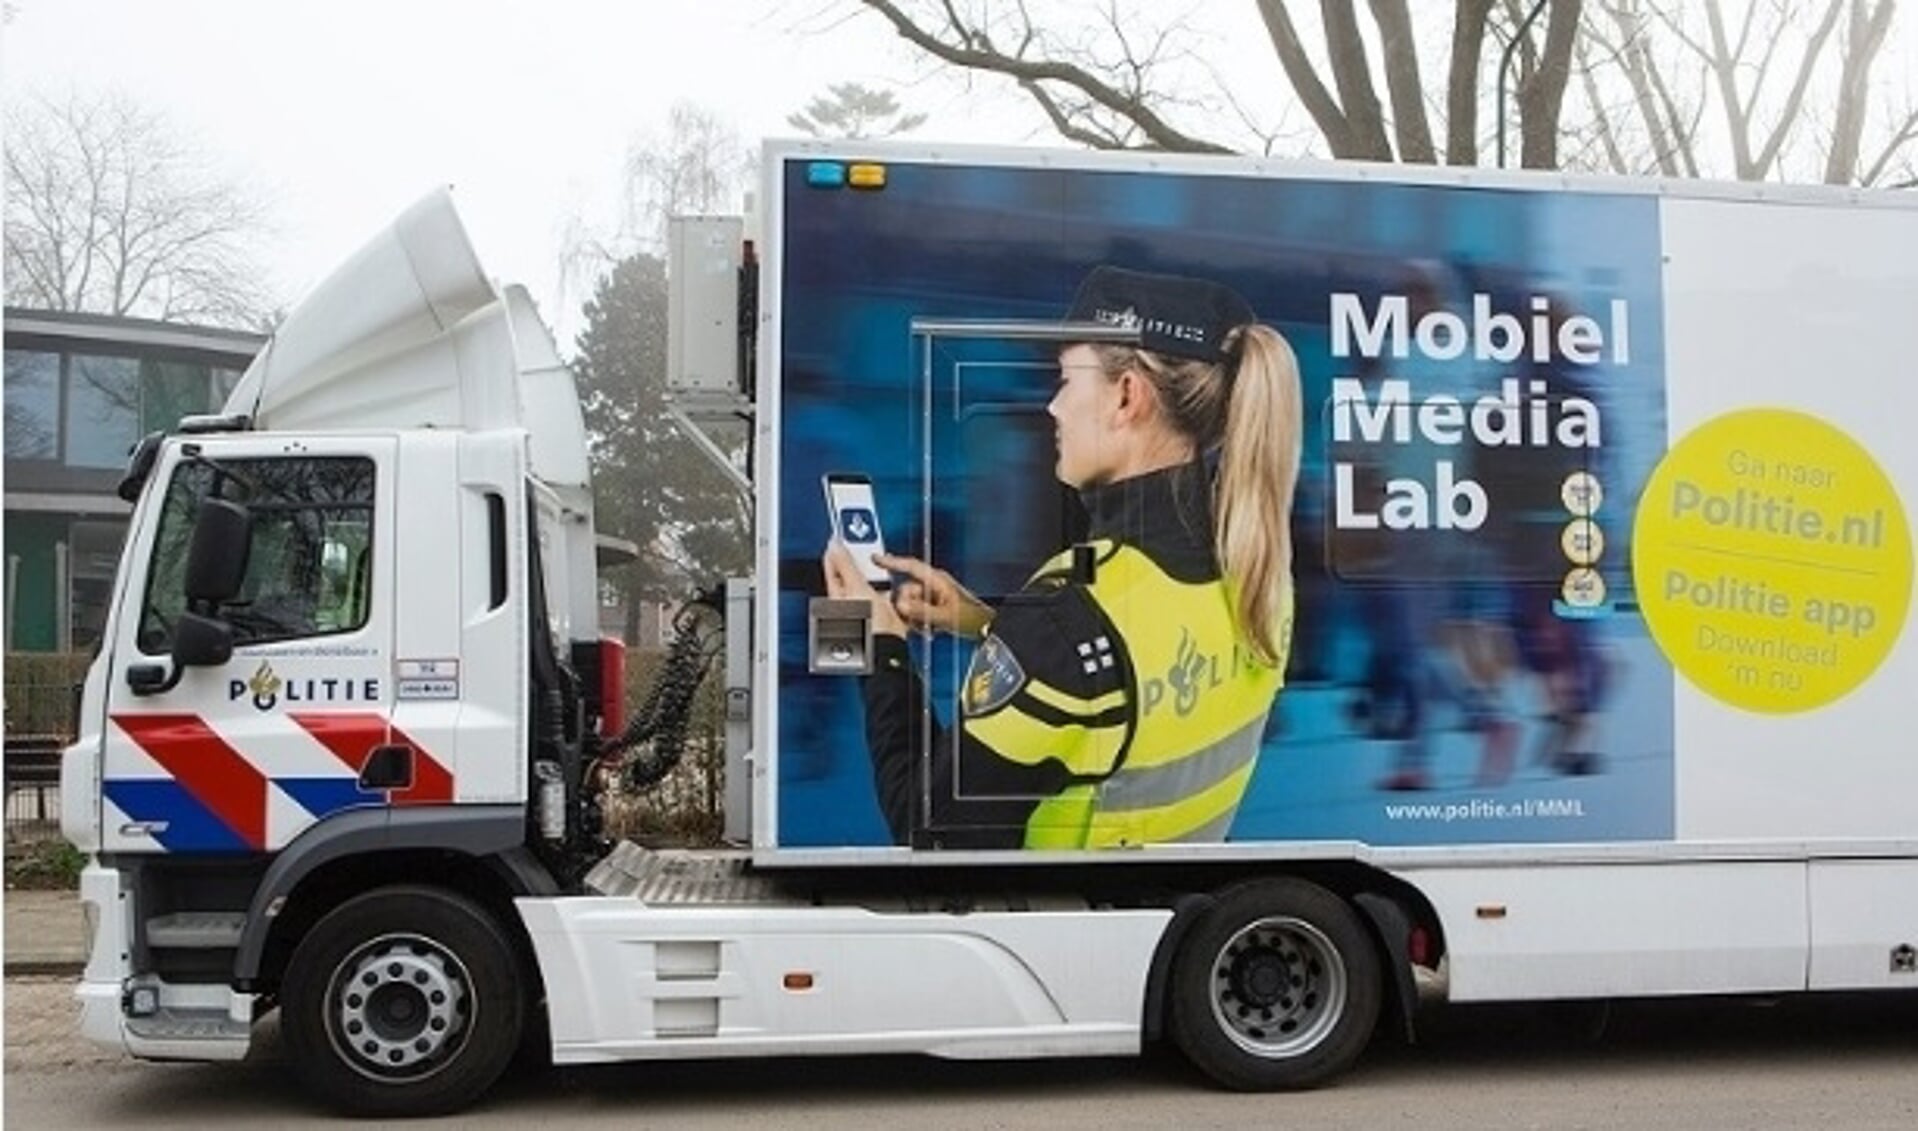 Mobiel Media Lab van de politie.